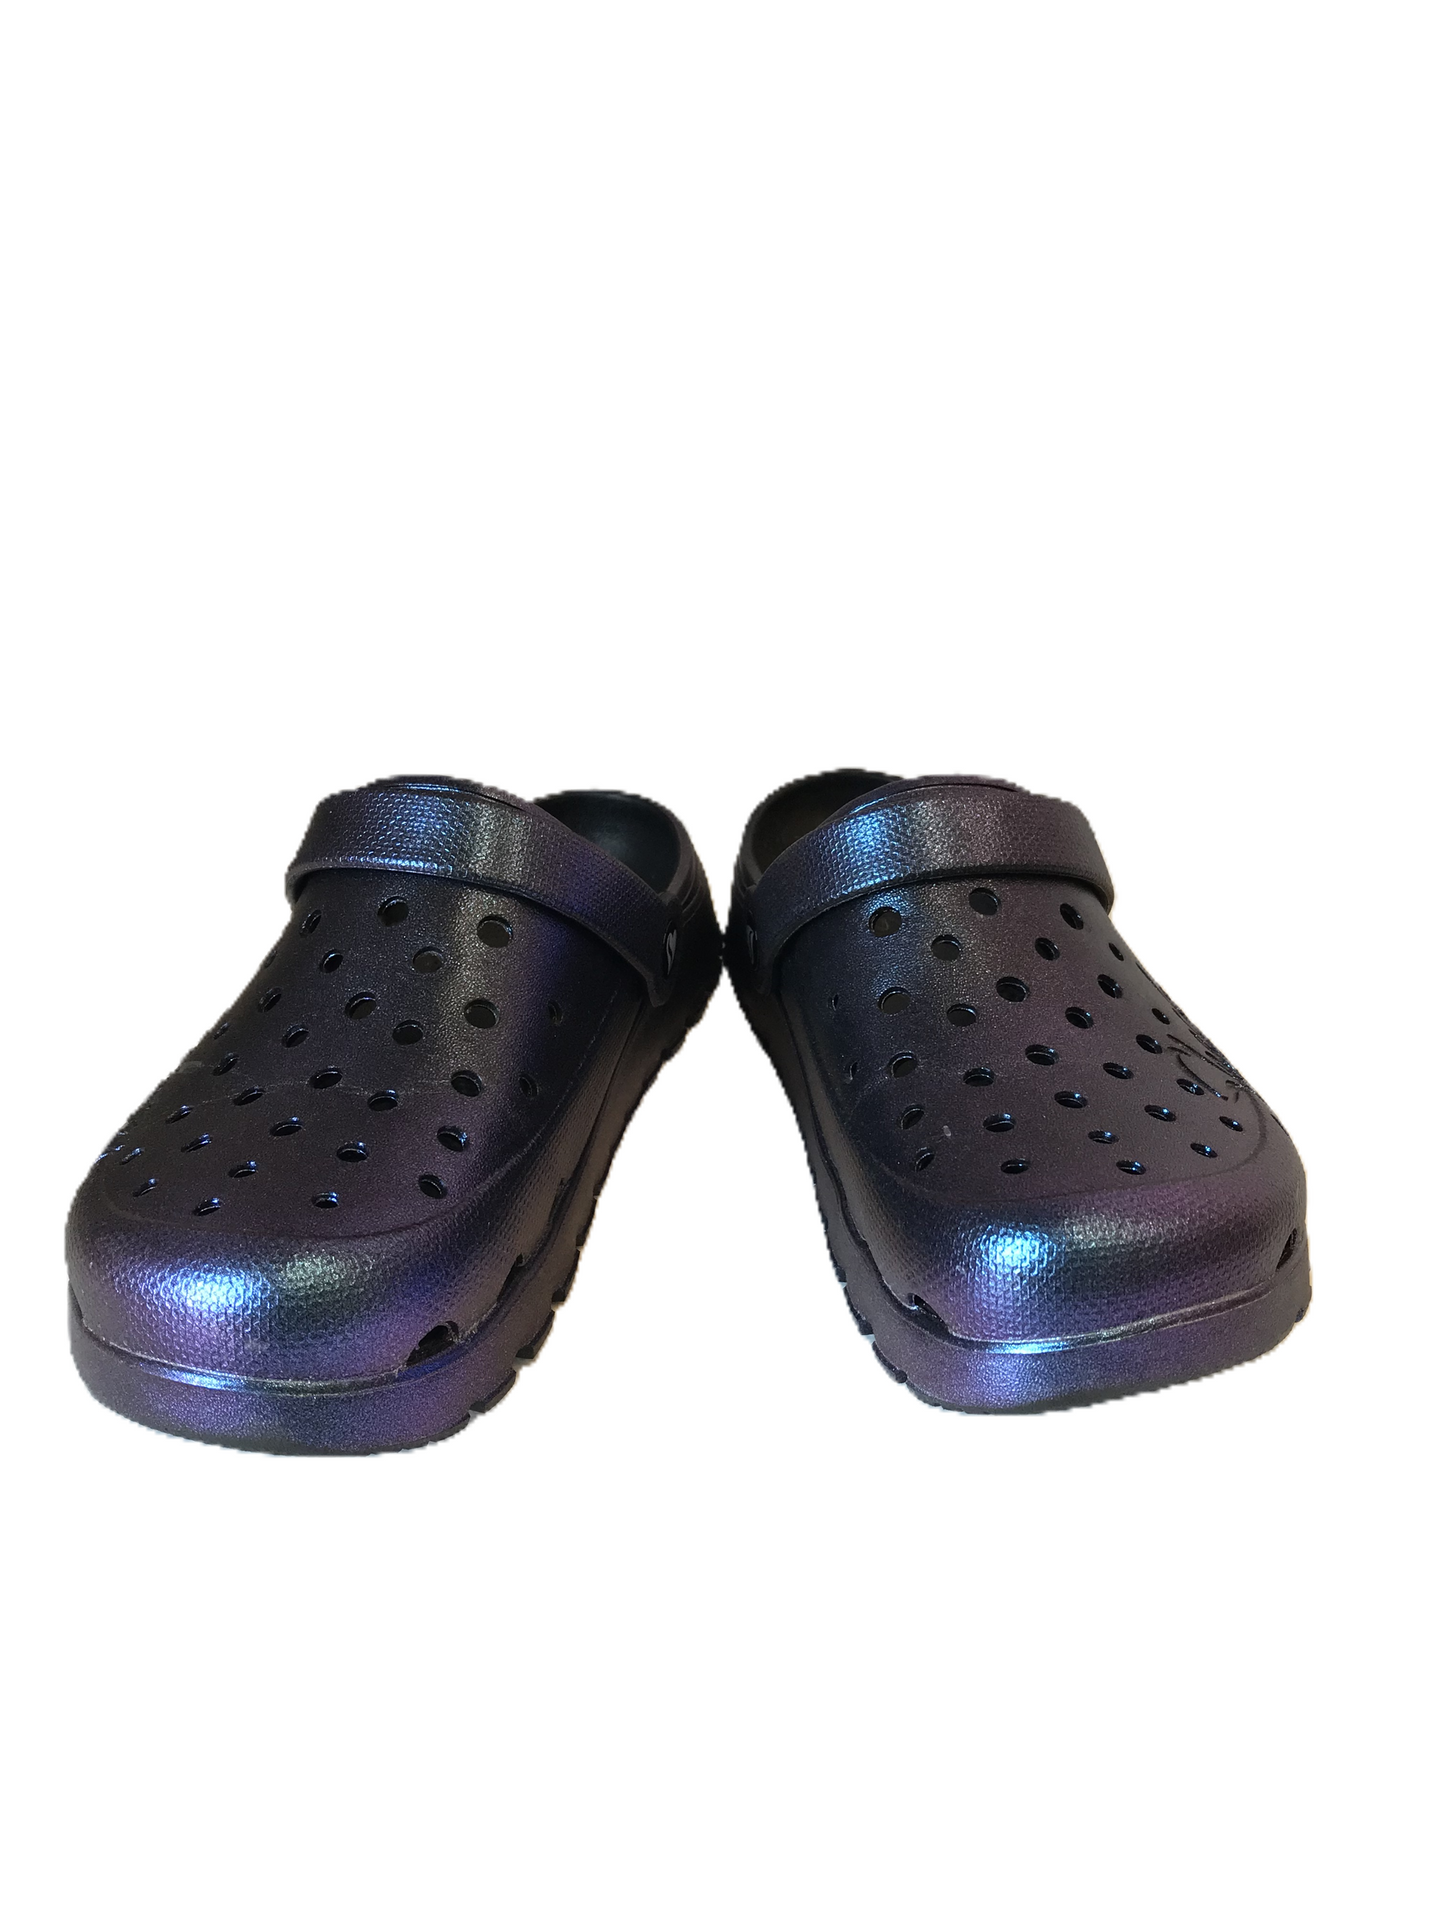 Purple Shoes Flats By Skechers, Size: 7.5